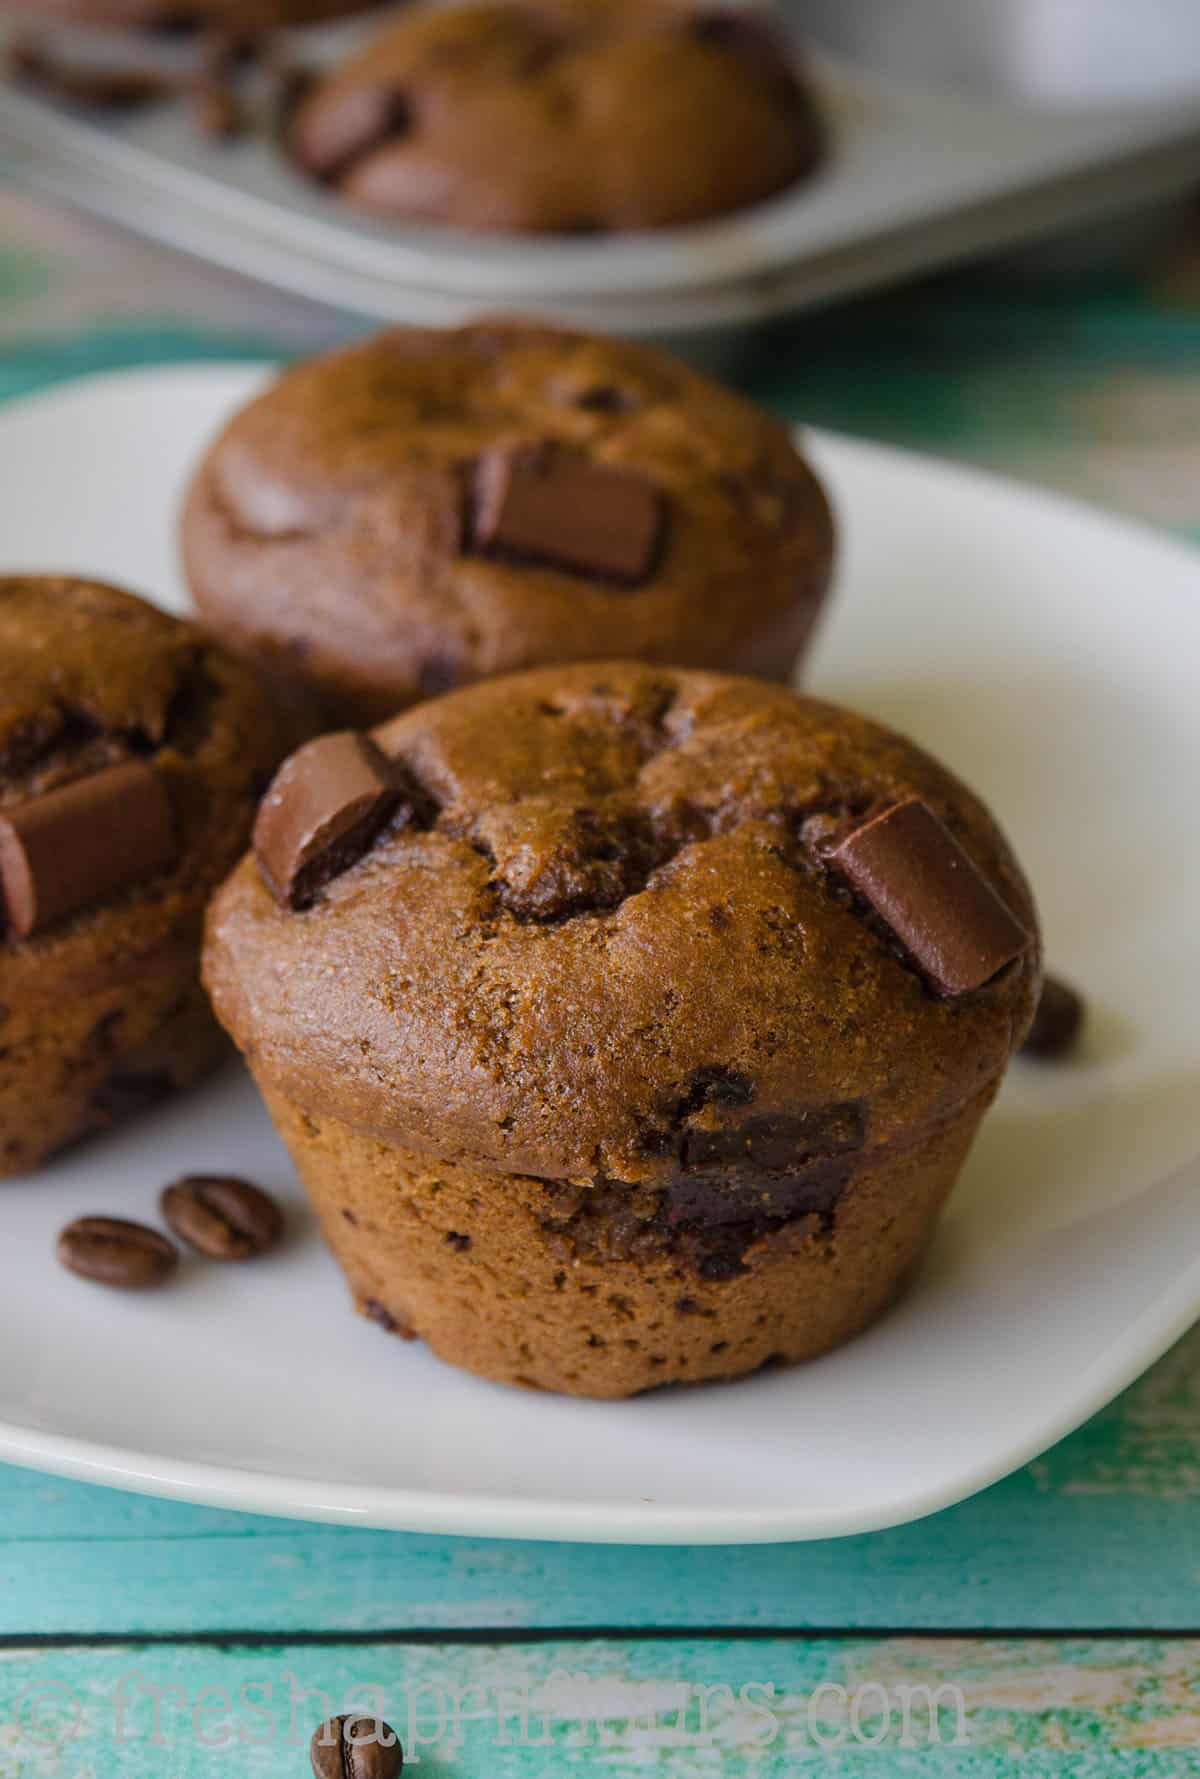 Mocha chocolate chunk muffins on a plate.